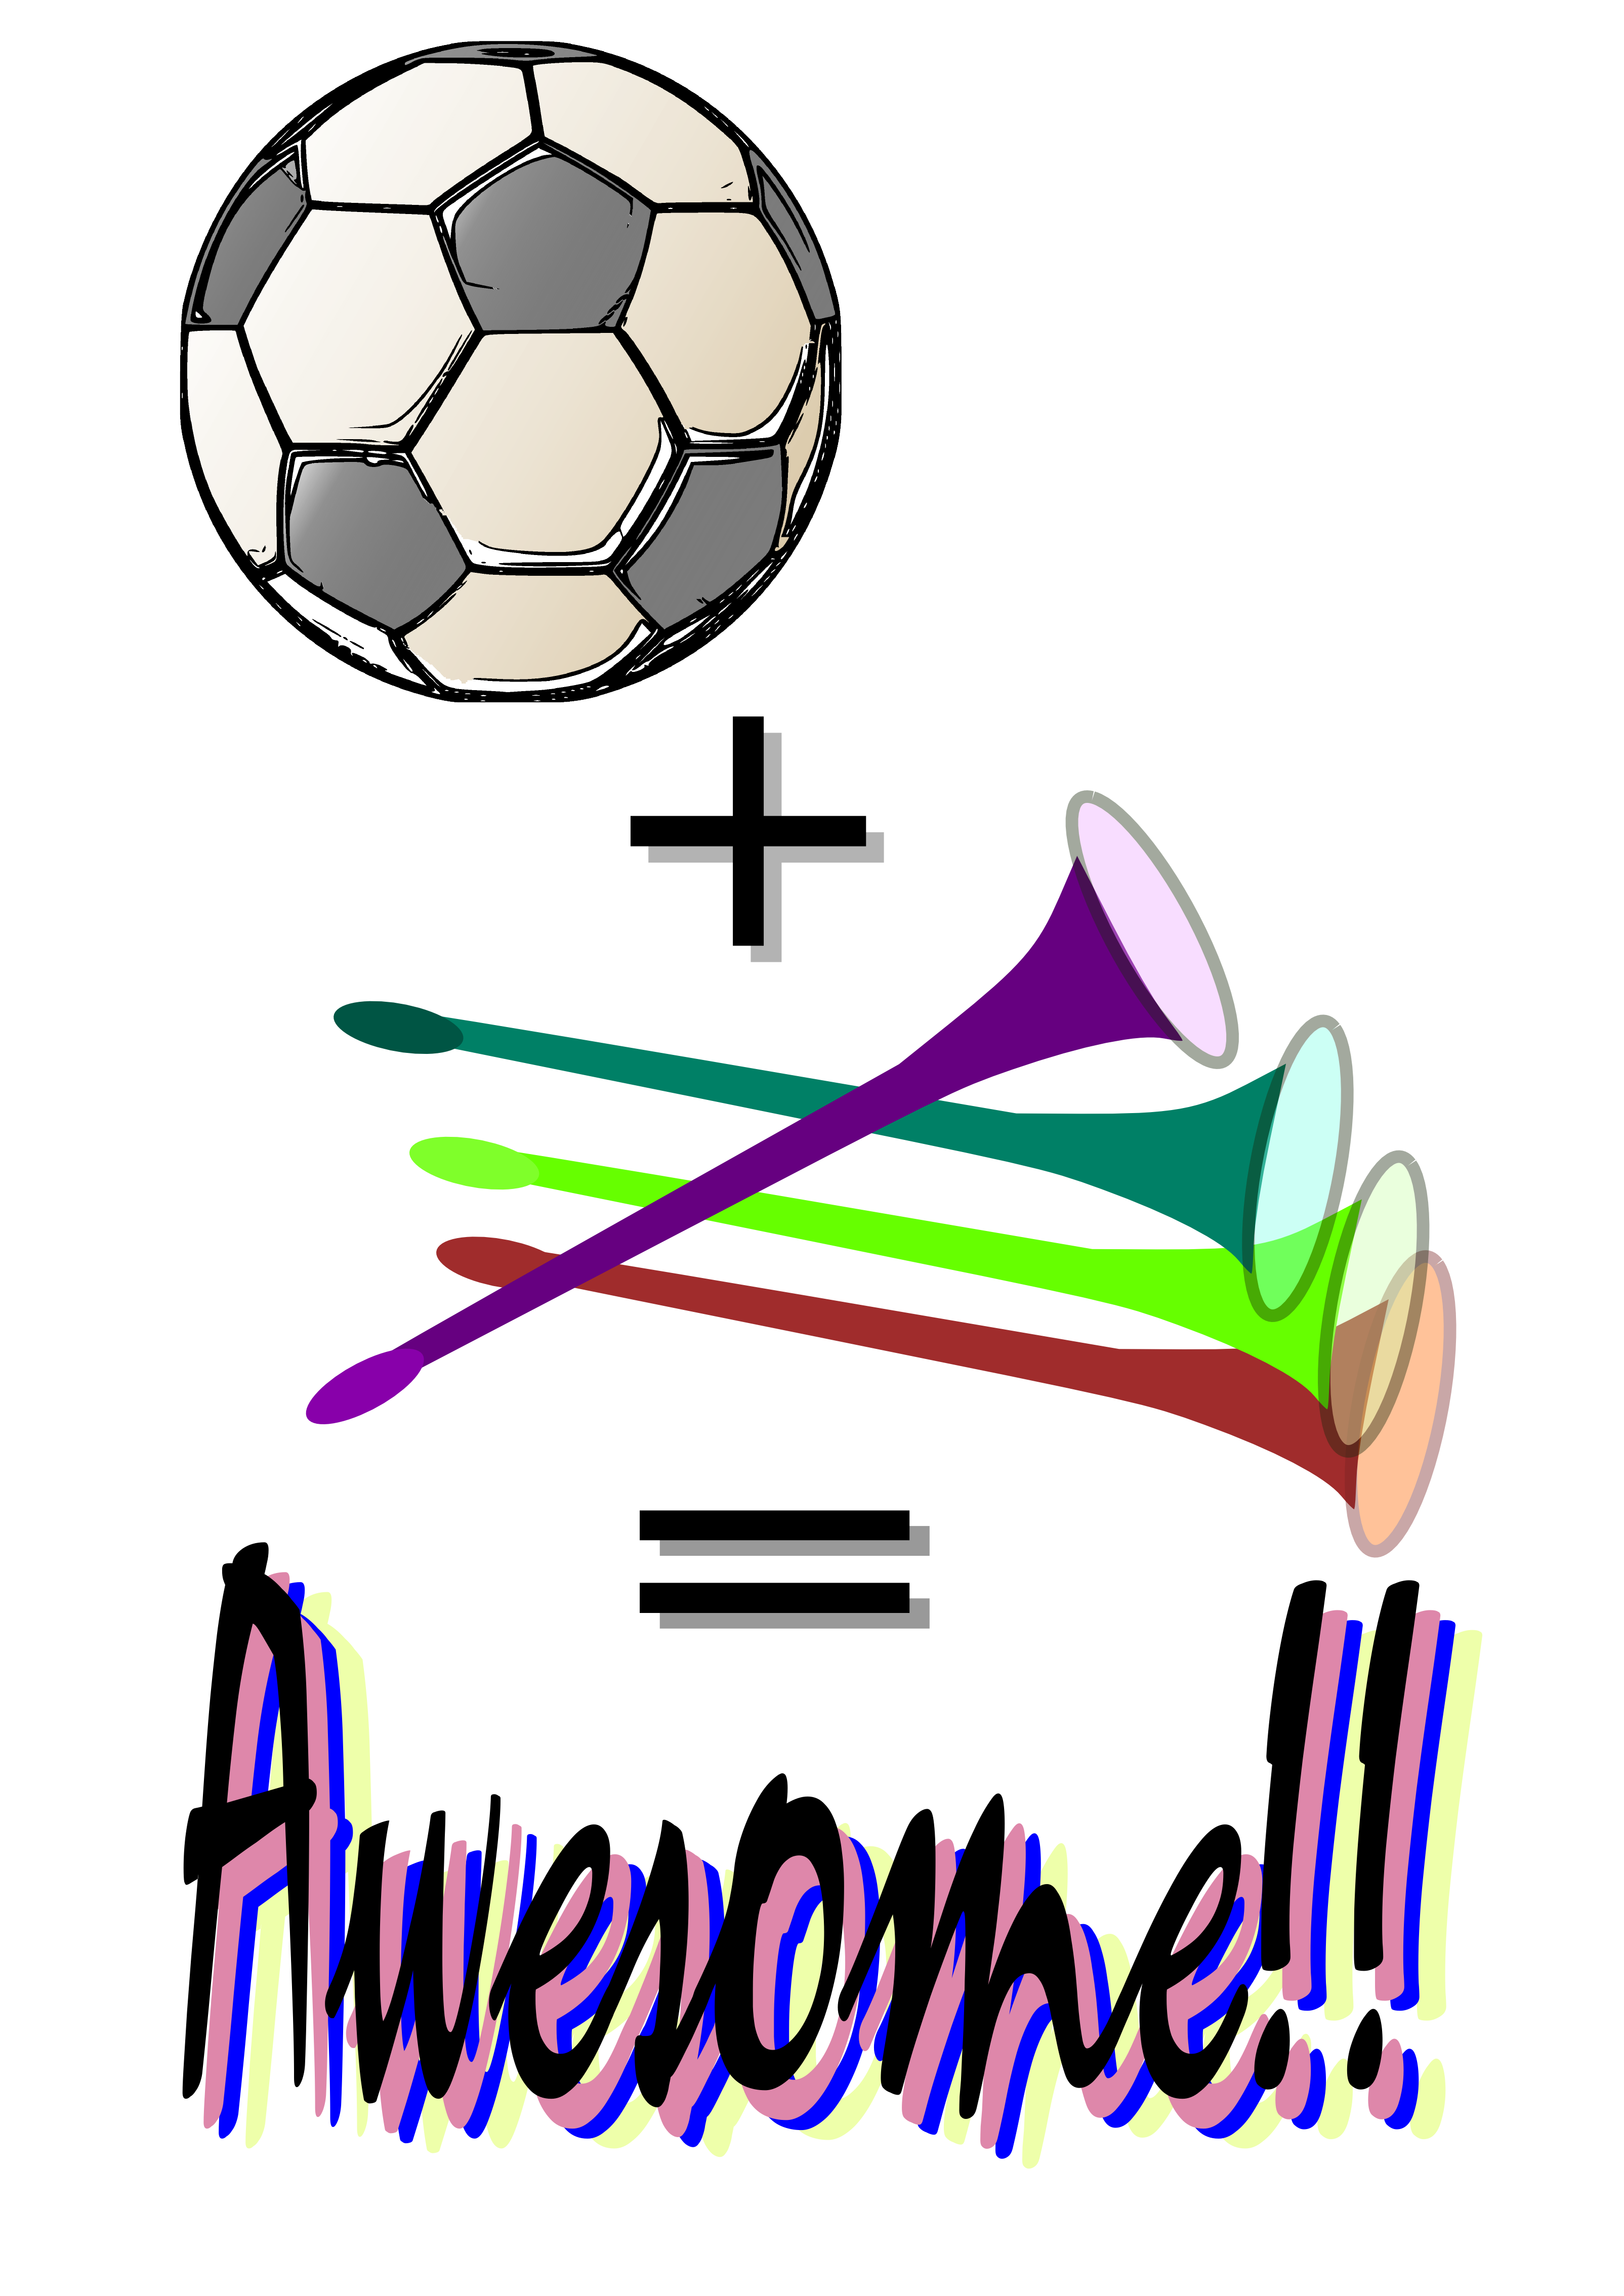 Soccer / Football + Vuvuzelas = awesome